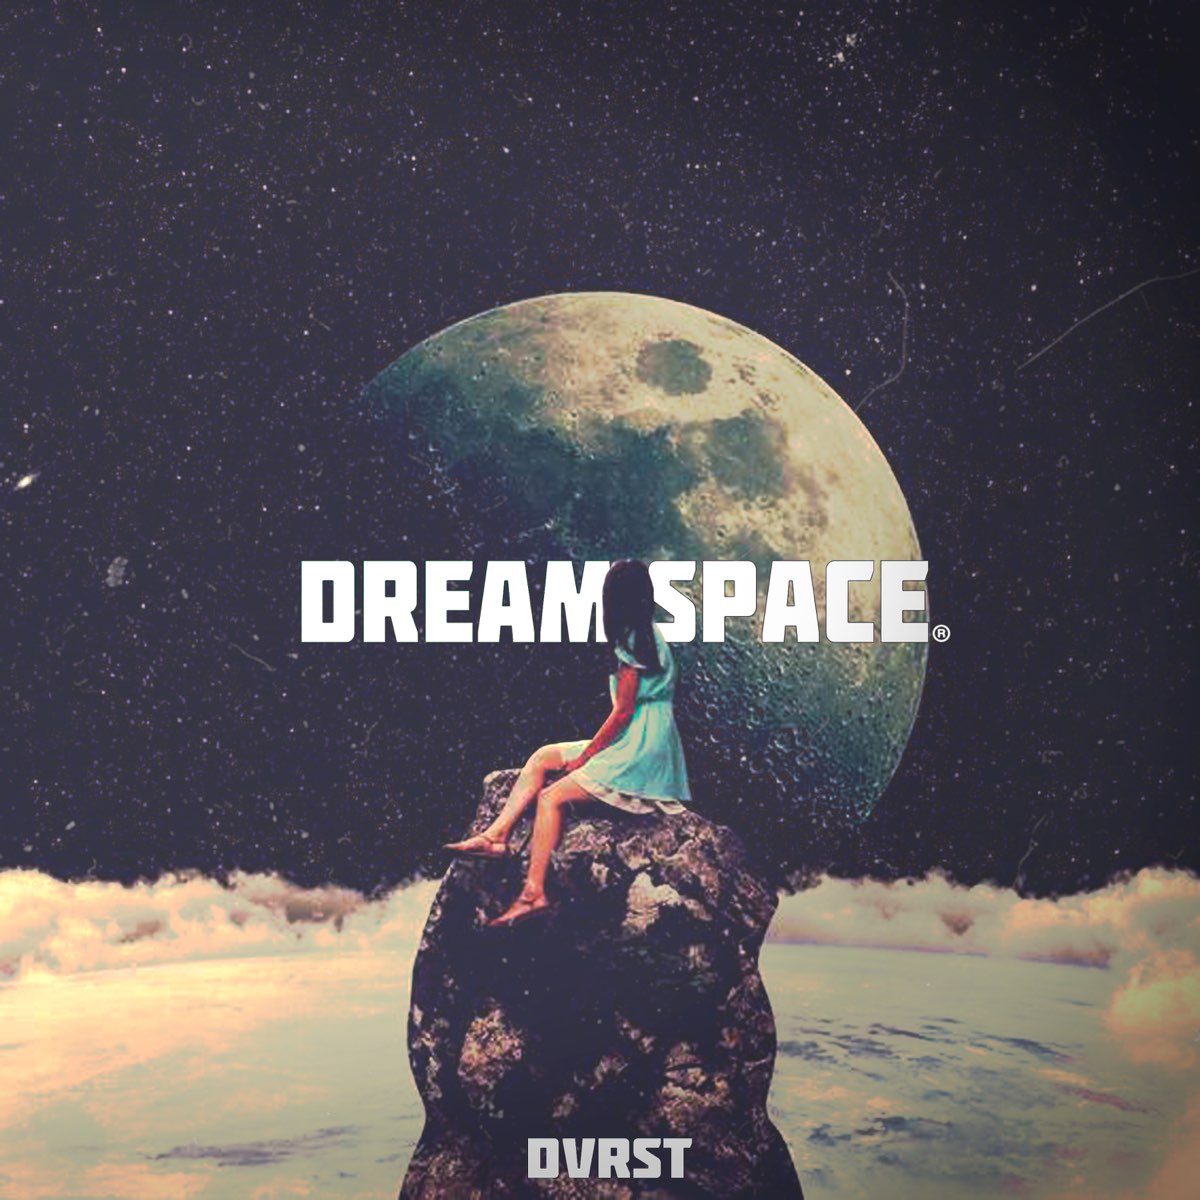 Dreams фонк. DVRST Dream Space. Dream Space обложка. Dream Space DVRST обложка. Обложки для треков.